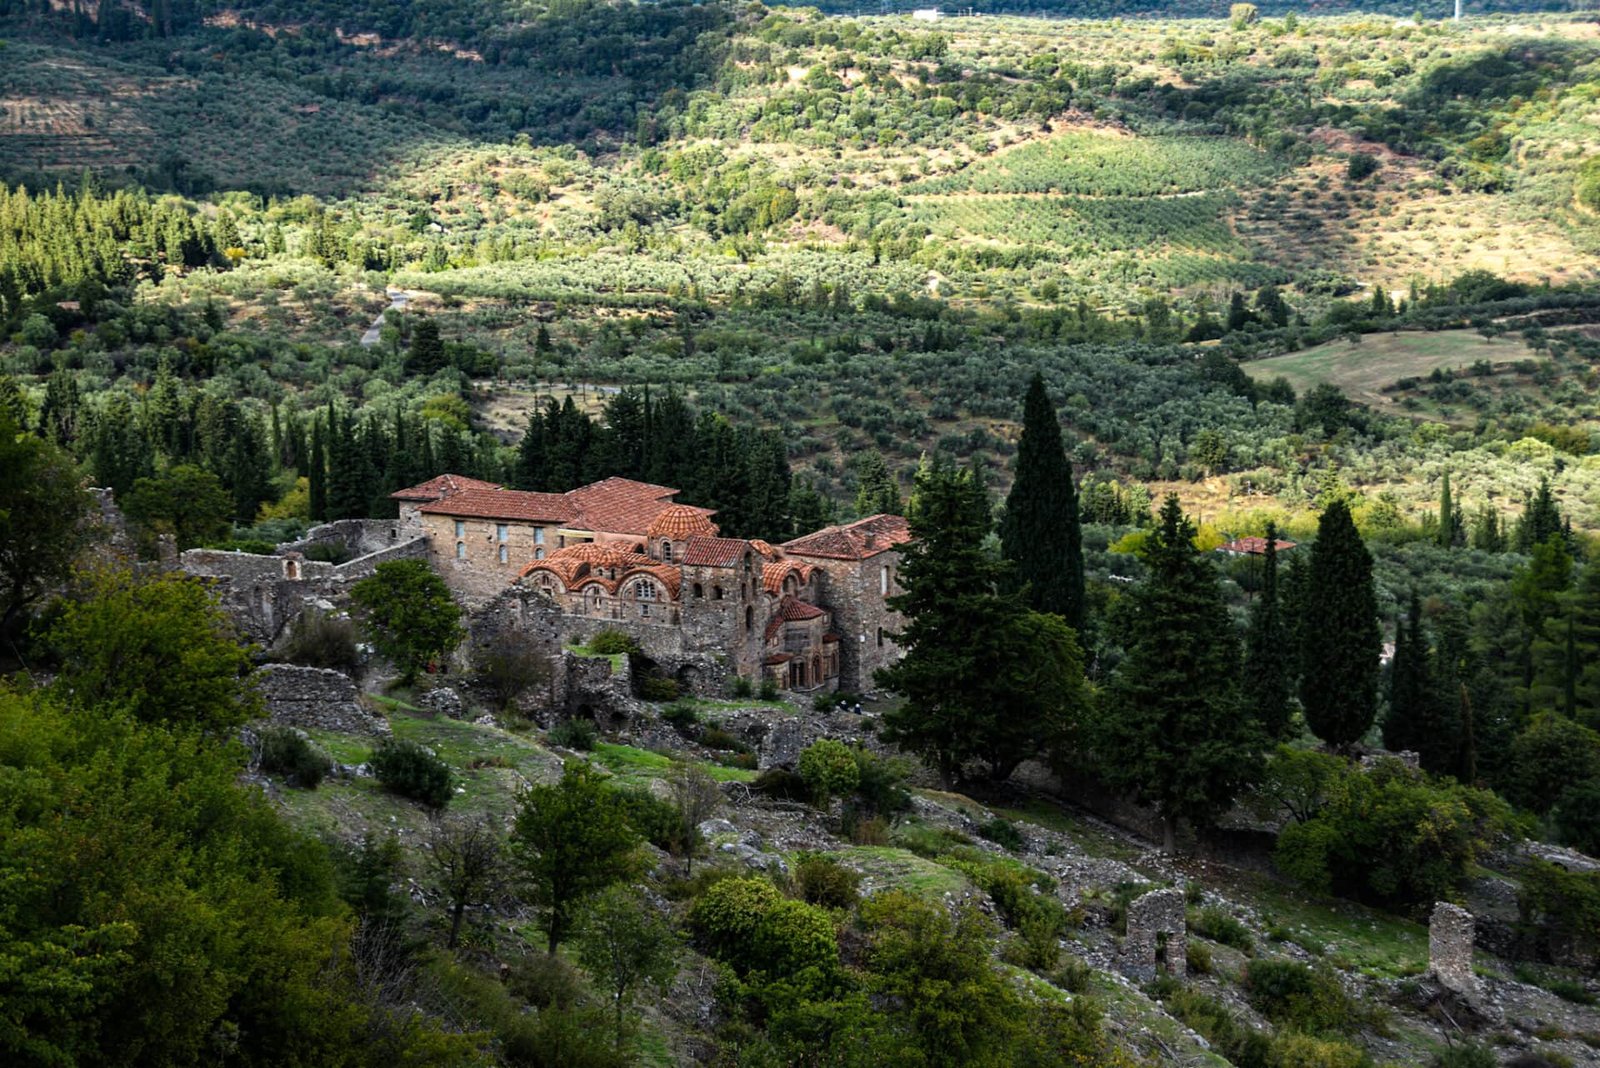 Byzantine monastery overlooking a fertile plain